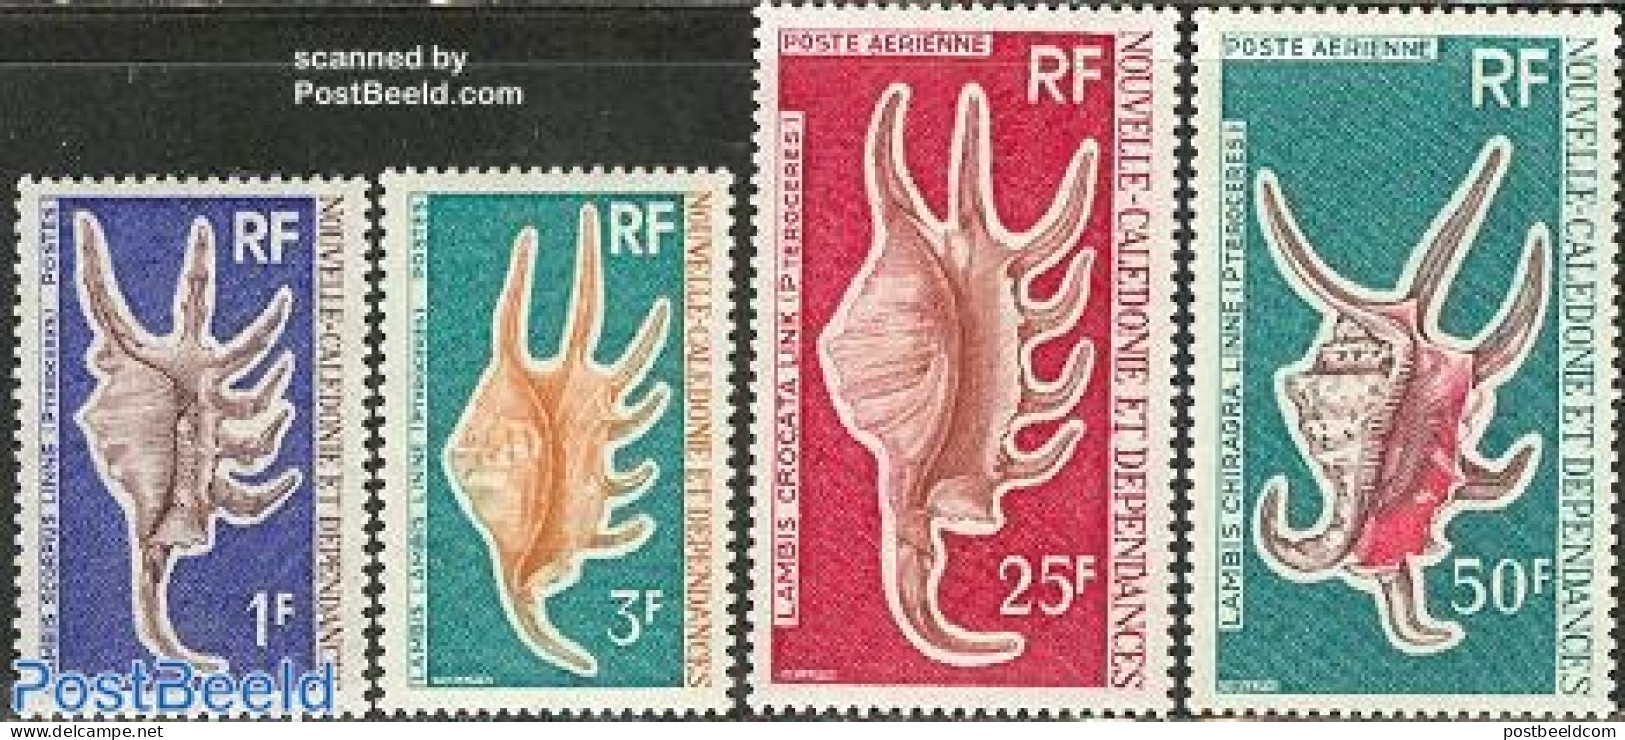 New Caledonia 1972 Shells 4v, Mint NH, Nature - Shells & Crustaceans - Neufs